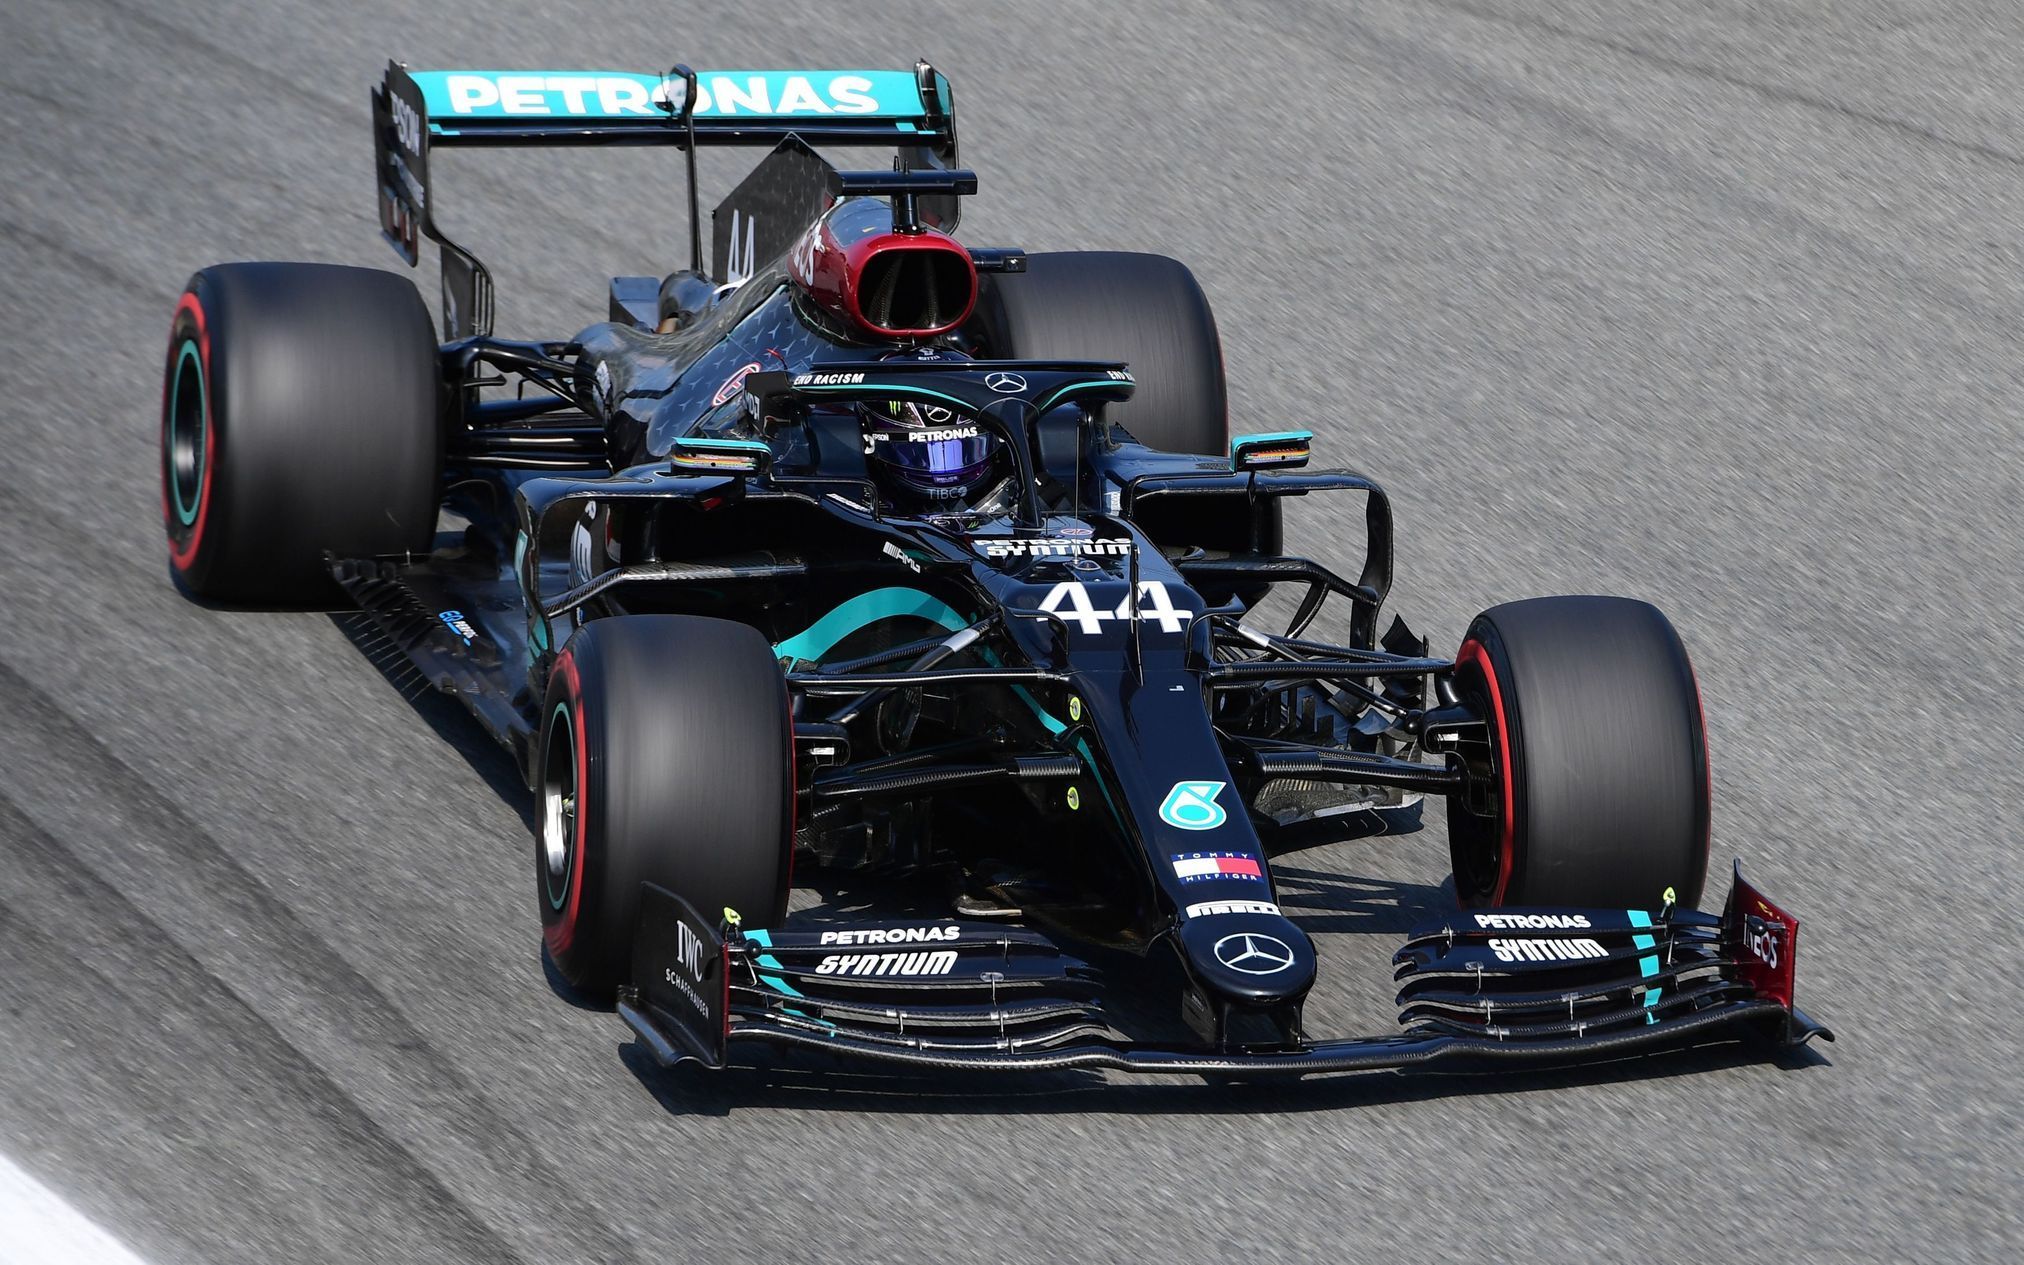 Lewis Hamilton v Mercedesu  ve Velké ceně Itálie formule 1 2020